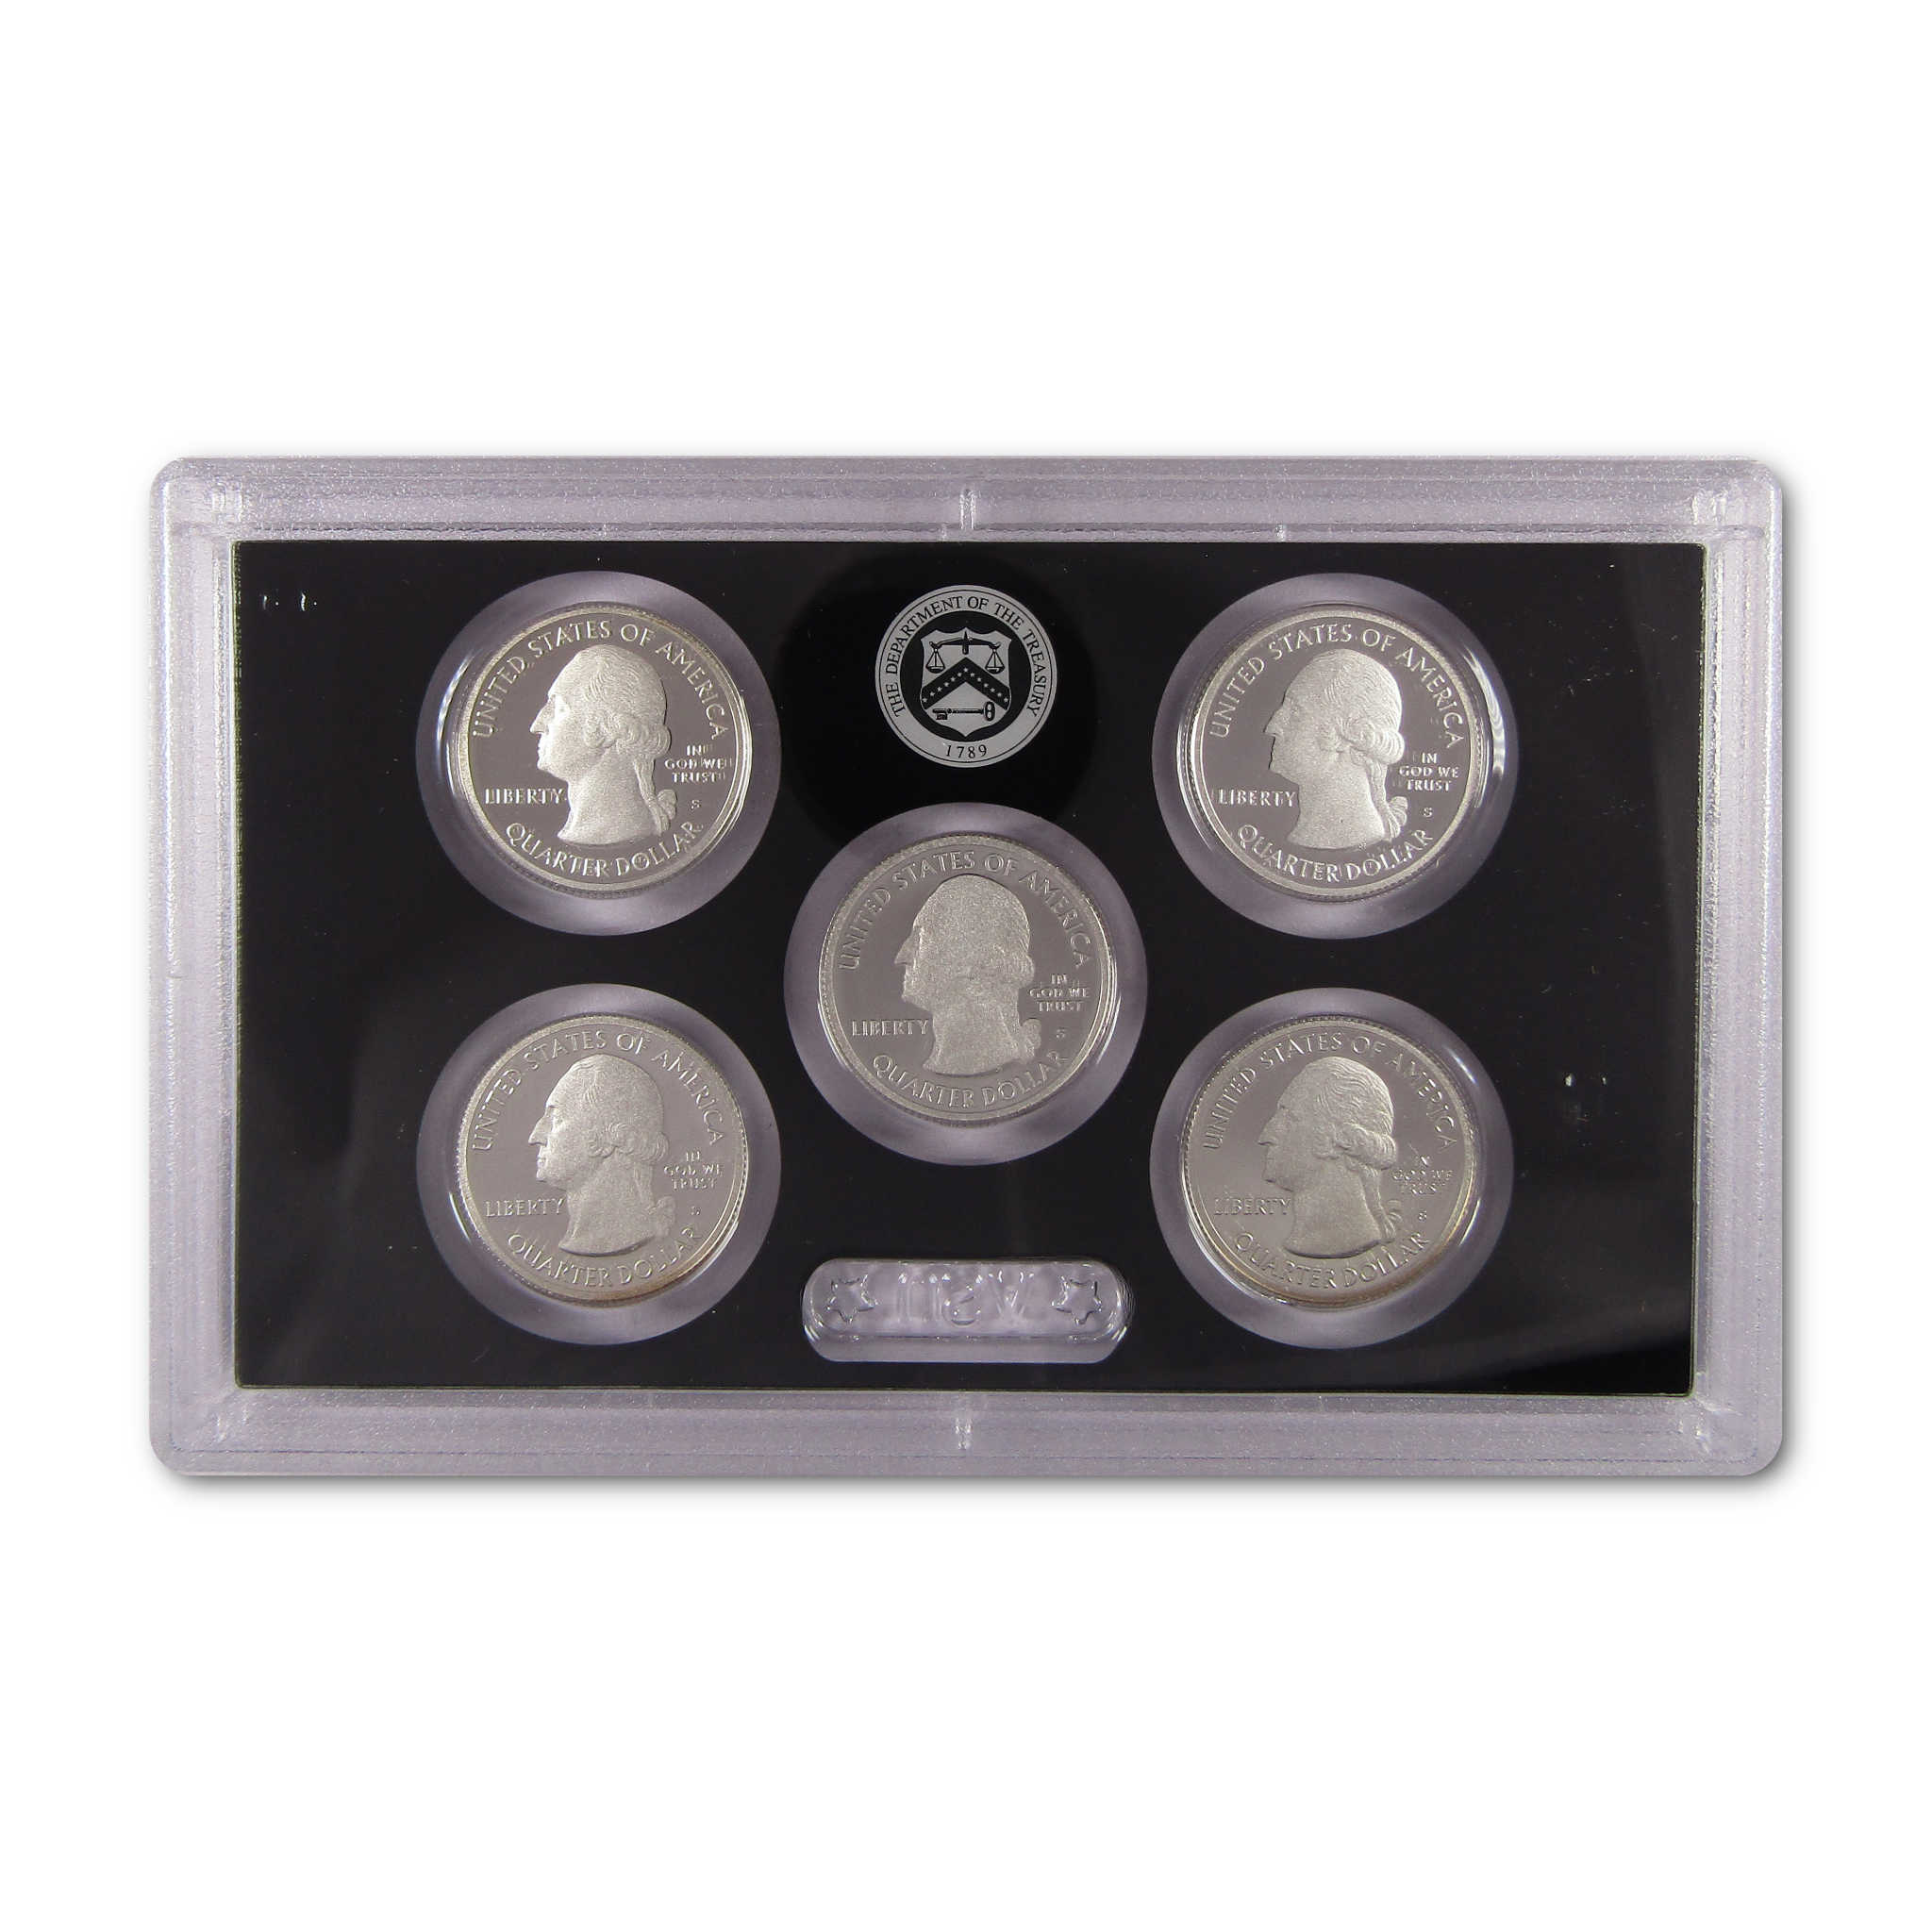 2013 America the Beautiful Quarter Silver Proof Set U.S. Mint OGP COA